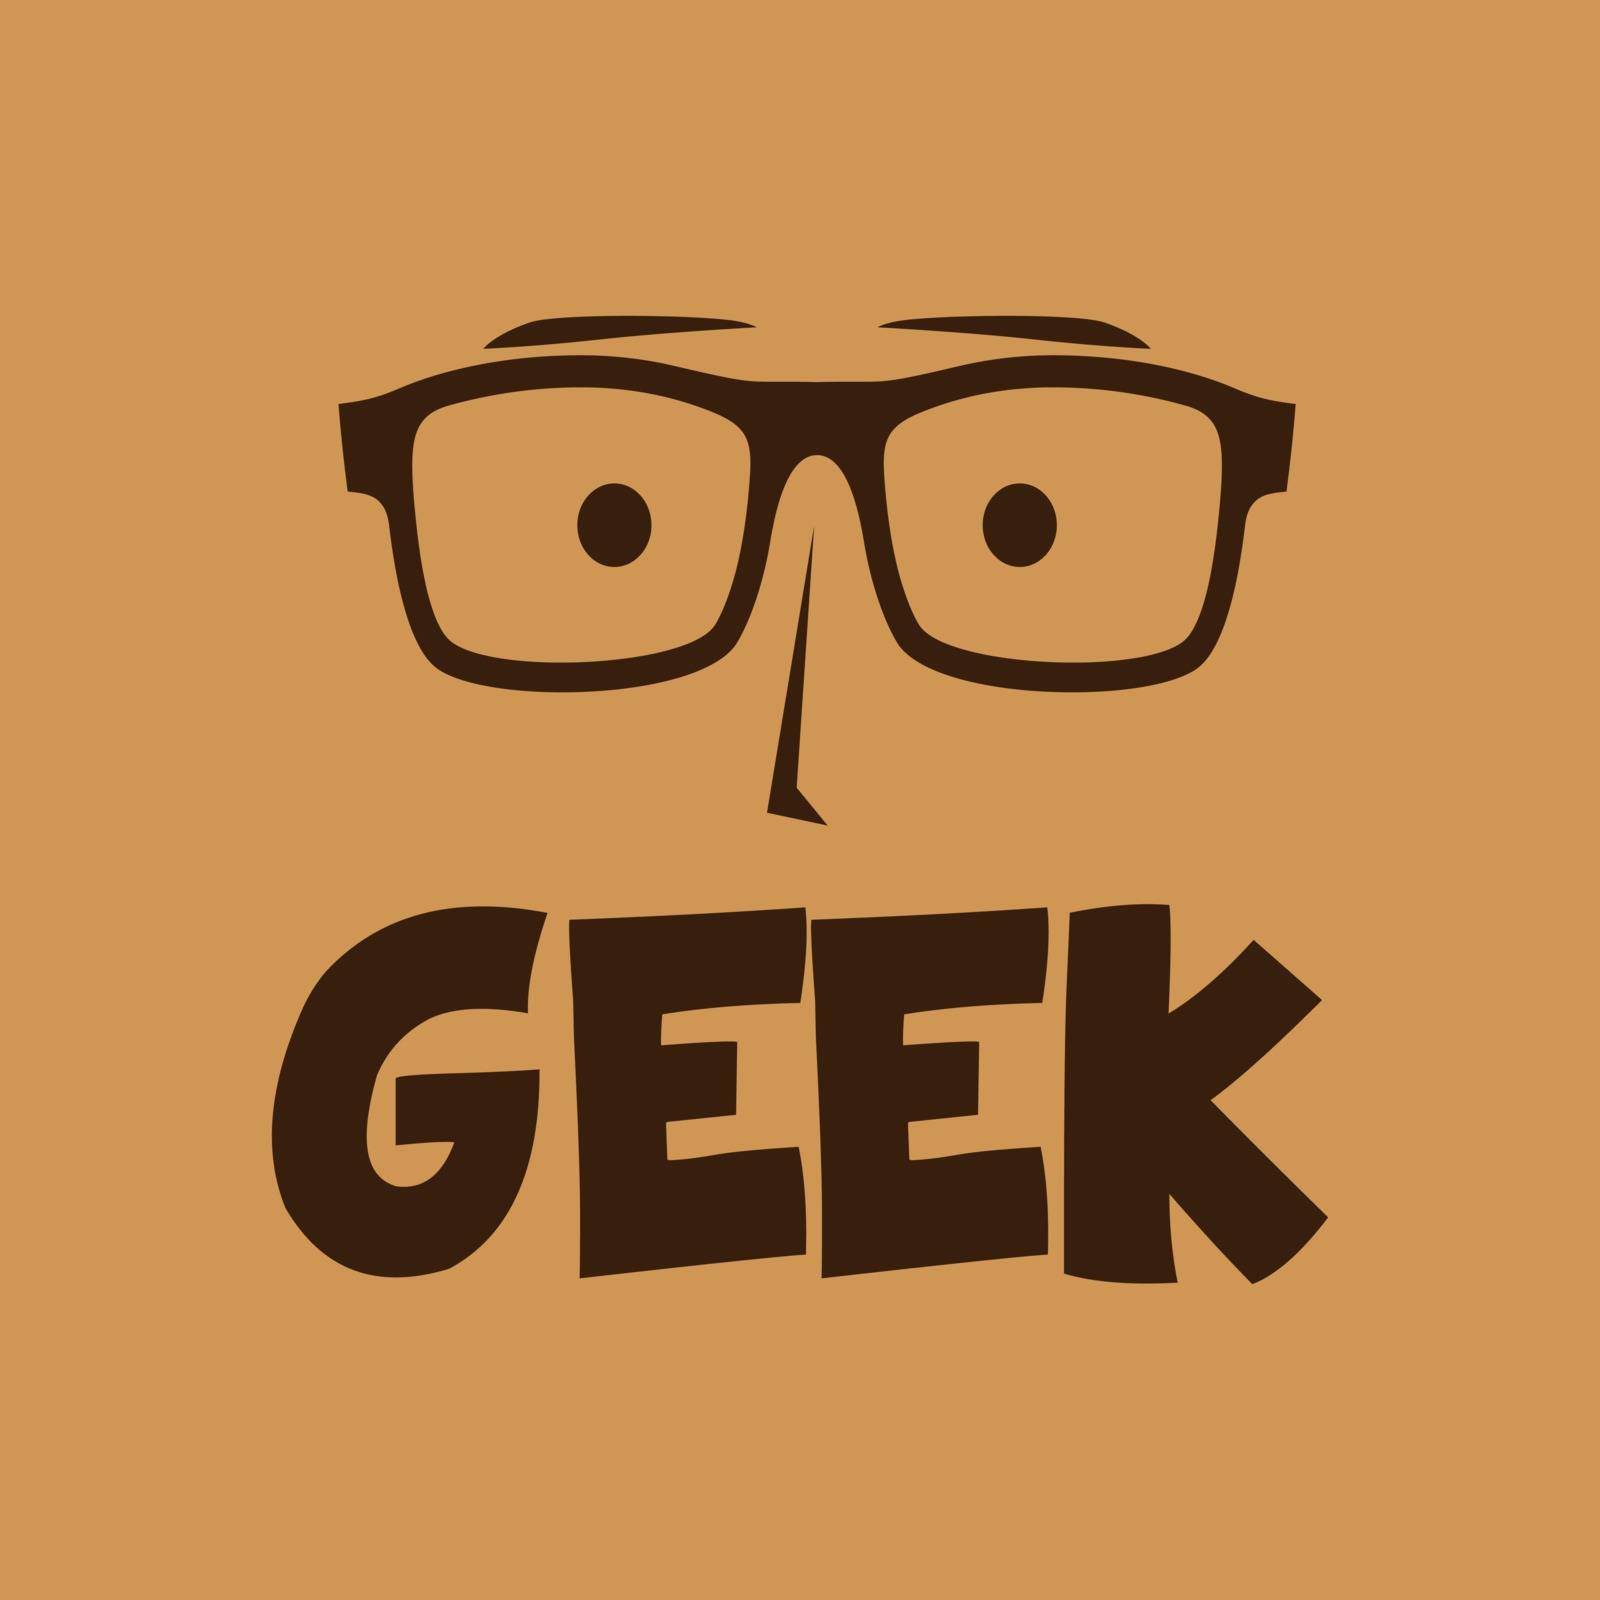 geek guy by vector1st